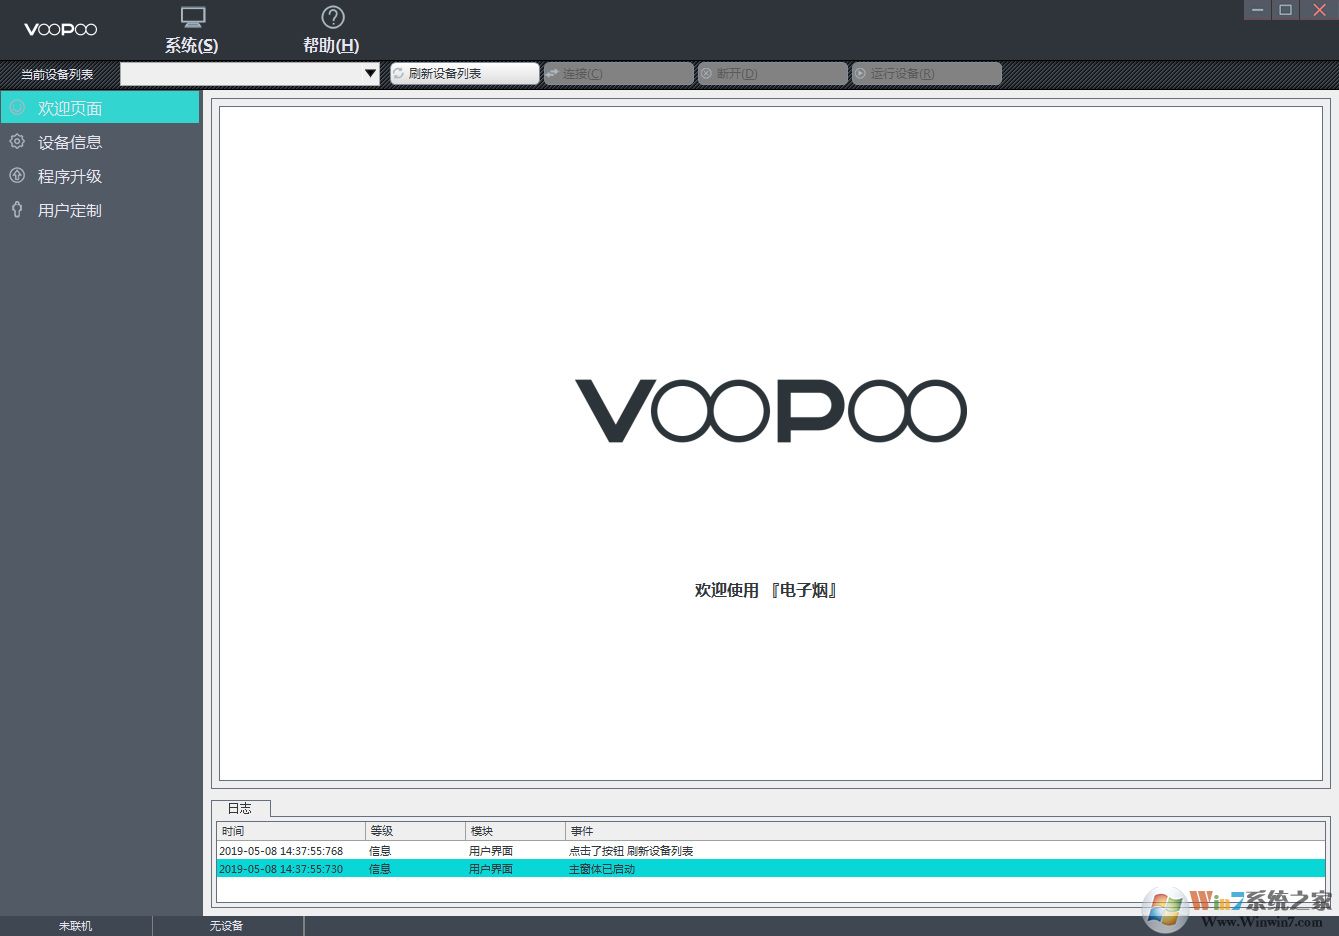 VooPoo电子烟配置工具客户端 V1.5.1.30 最新版